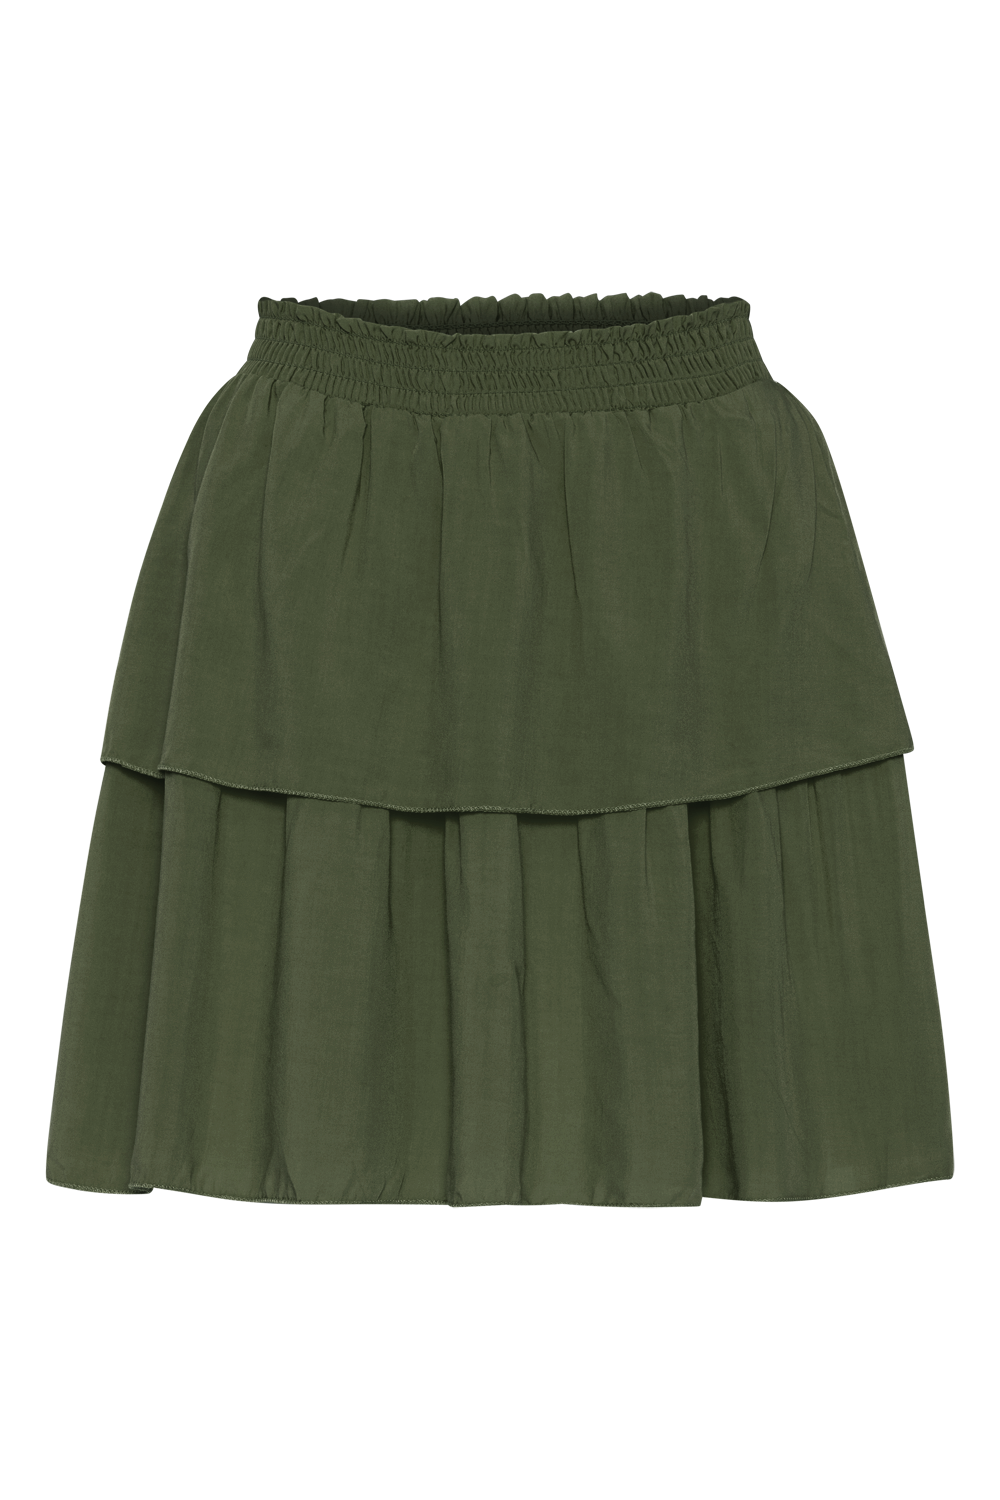 Sally Short Skirt Solid Army Green | Americandreams